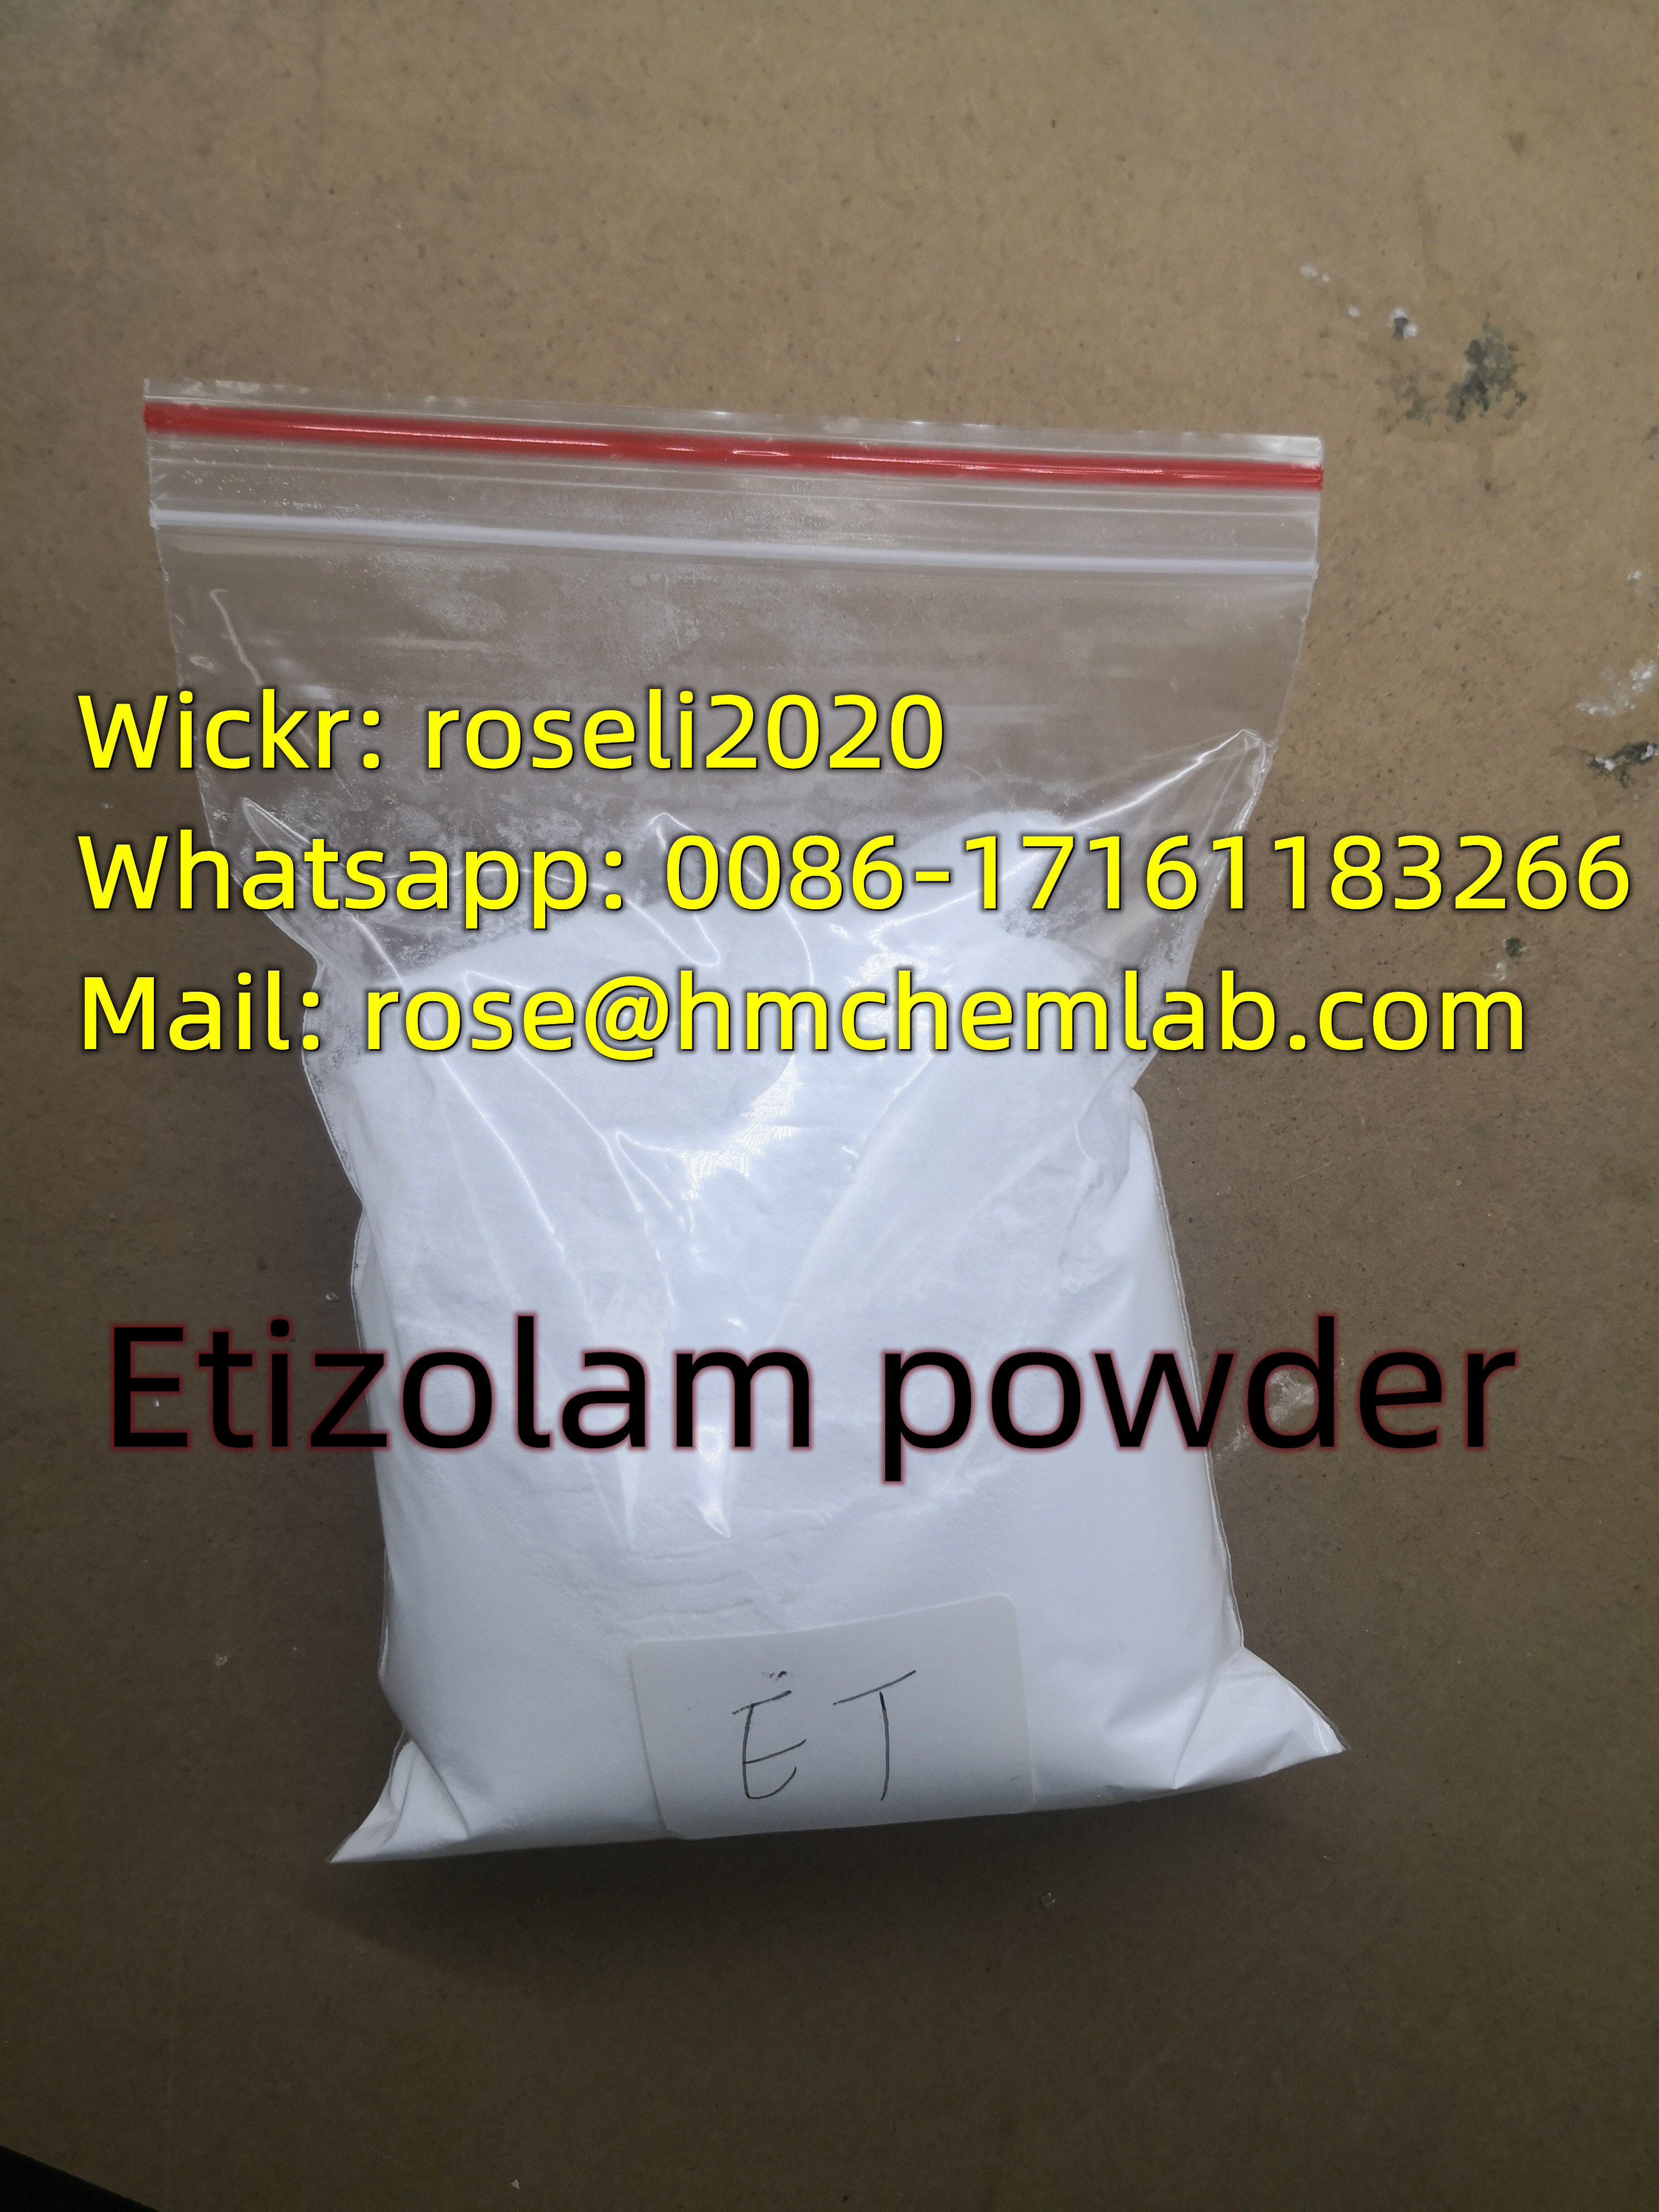 Etizolam powder Wickr: roseli2020 Whatsapp: +86 17161183266